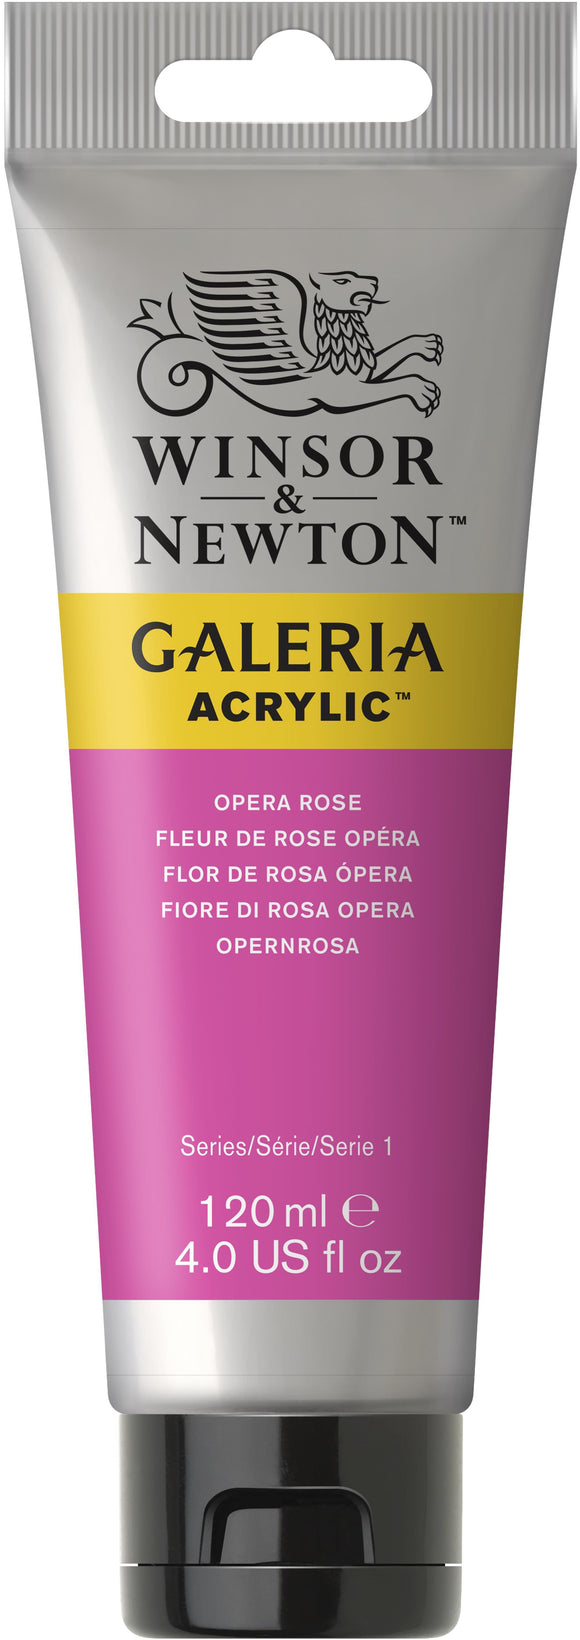 Winsor & Newton Galeria Acrylic Opera Rose 120Ml